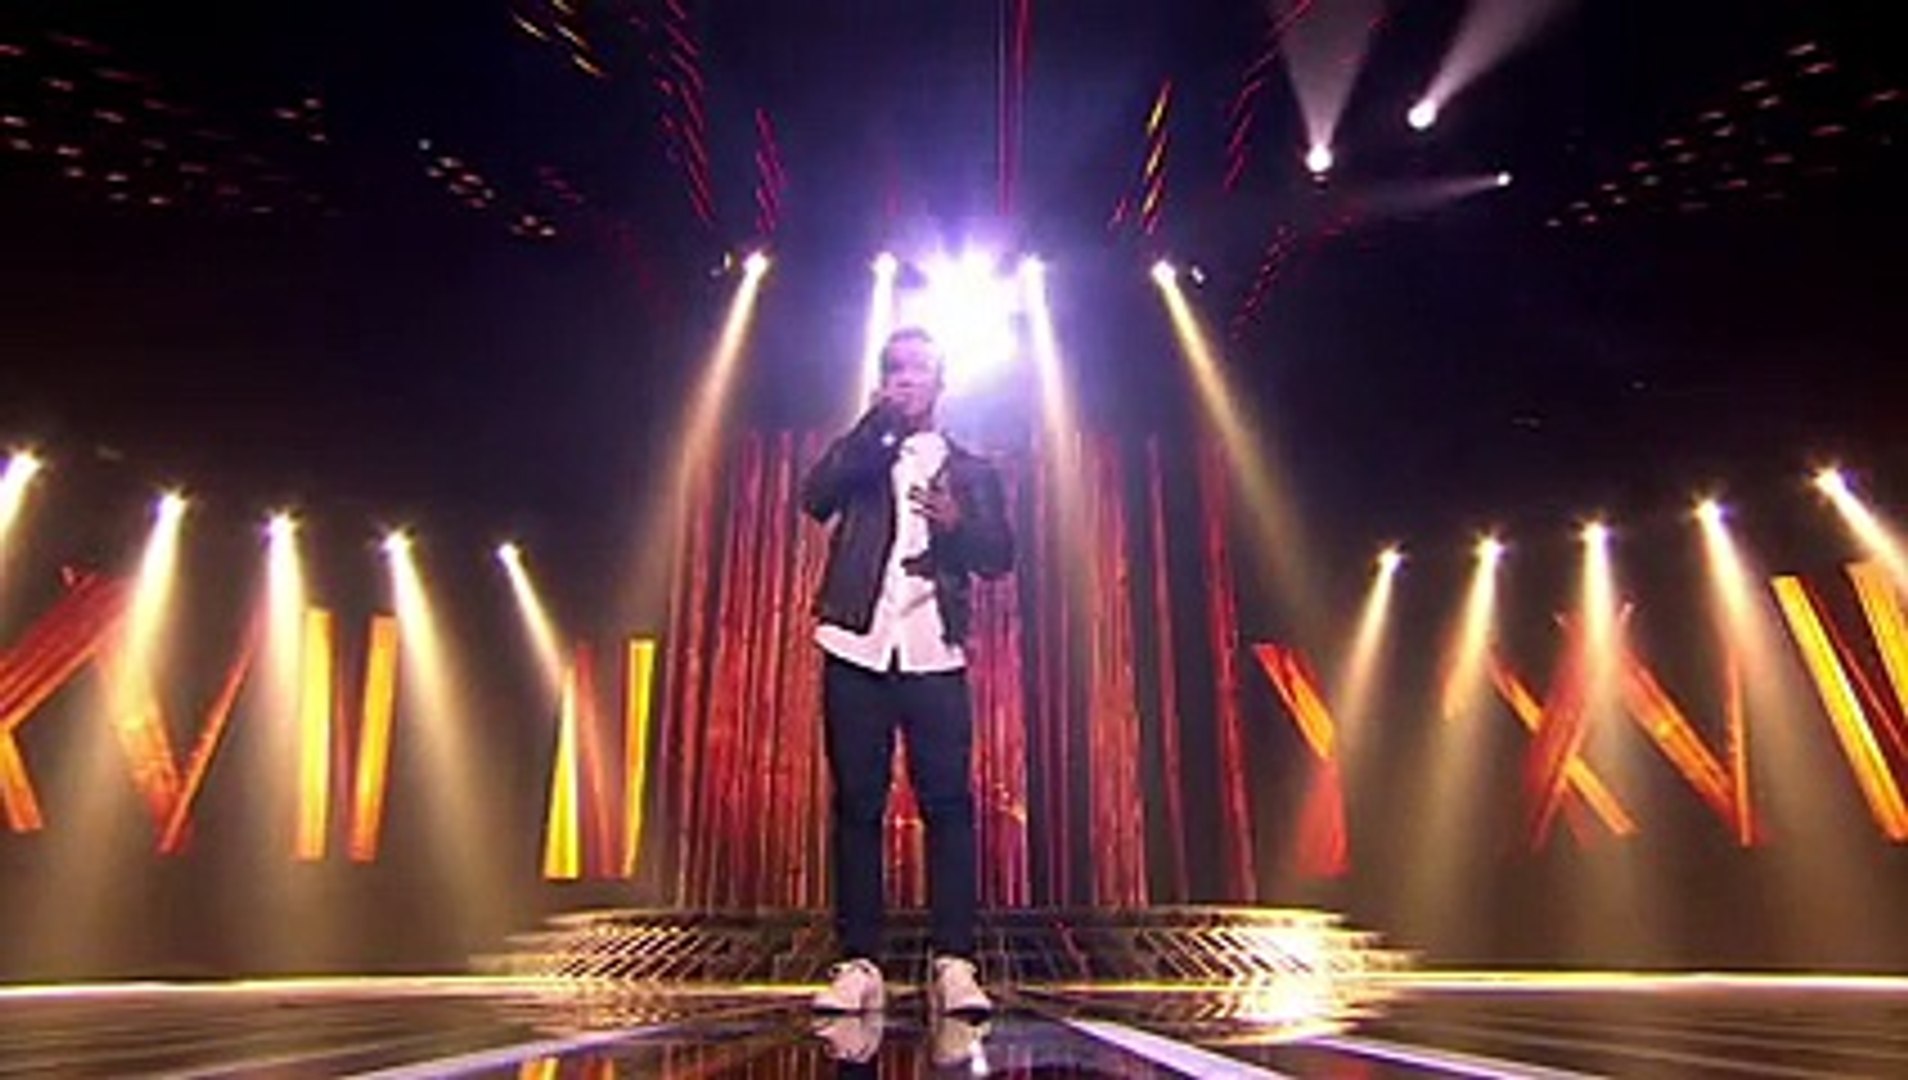 Sam Callahan sings Iris by the Goo Goo Dolls - Live Week 6 - The X Factor 2013 - Official Channel